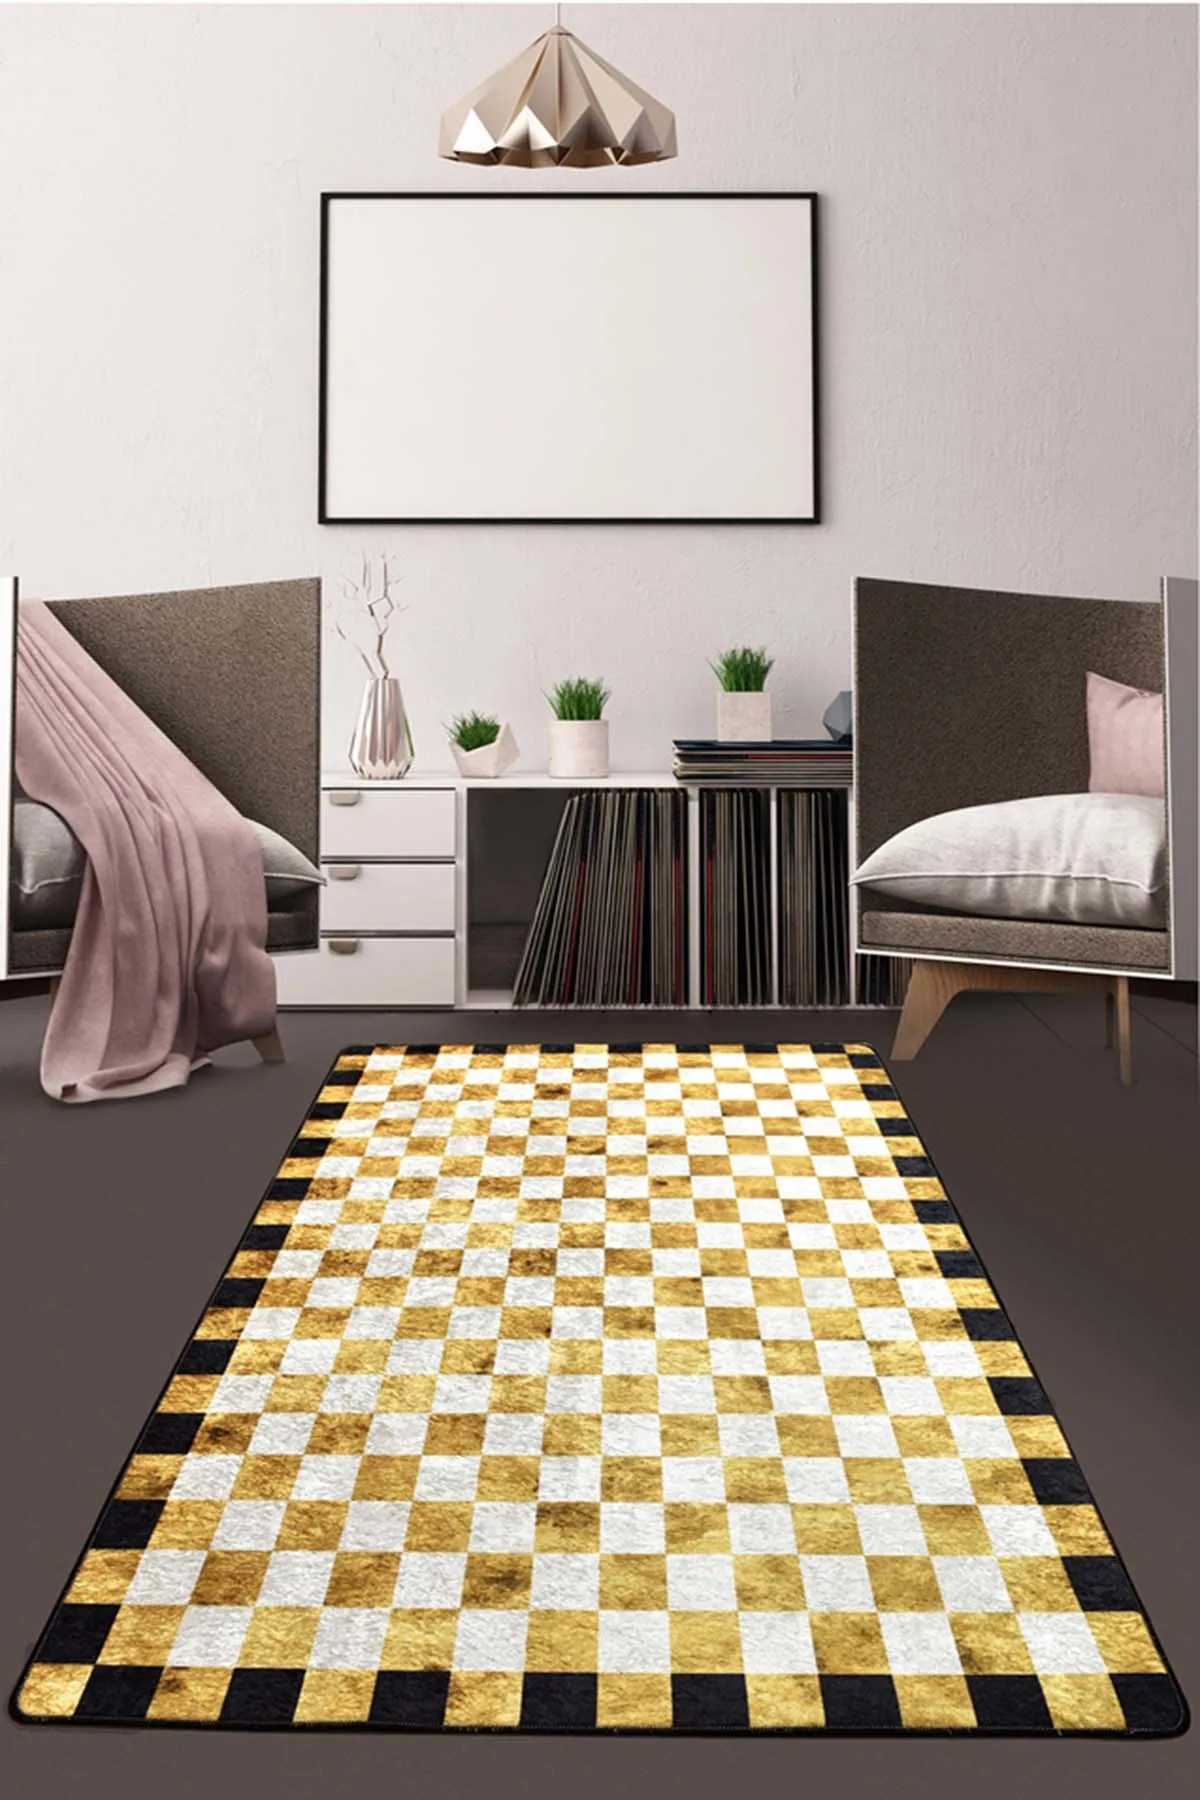 

Coper Printed Livingroom Area Rugs Non-slip Sole Carpet Square Patterned Rug Kitchen Bedroom Diningroom Carpet